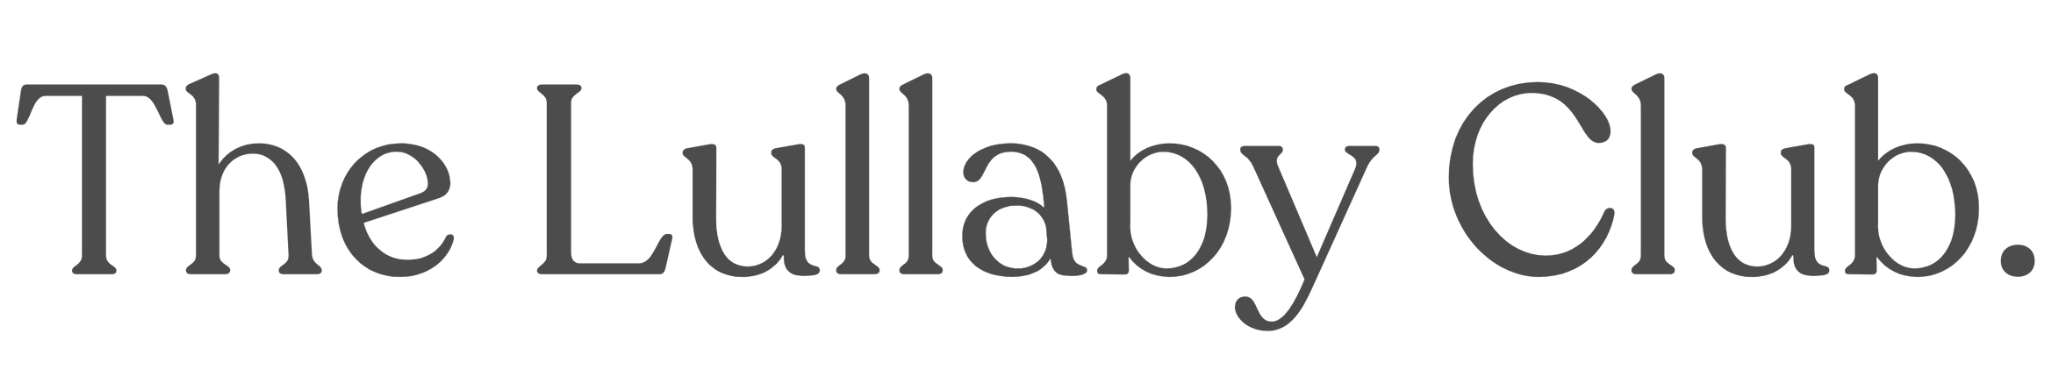 The Lullaby Club logo